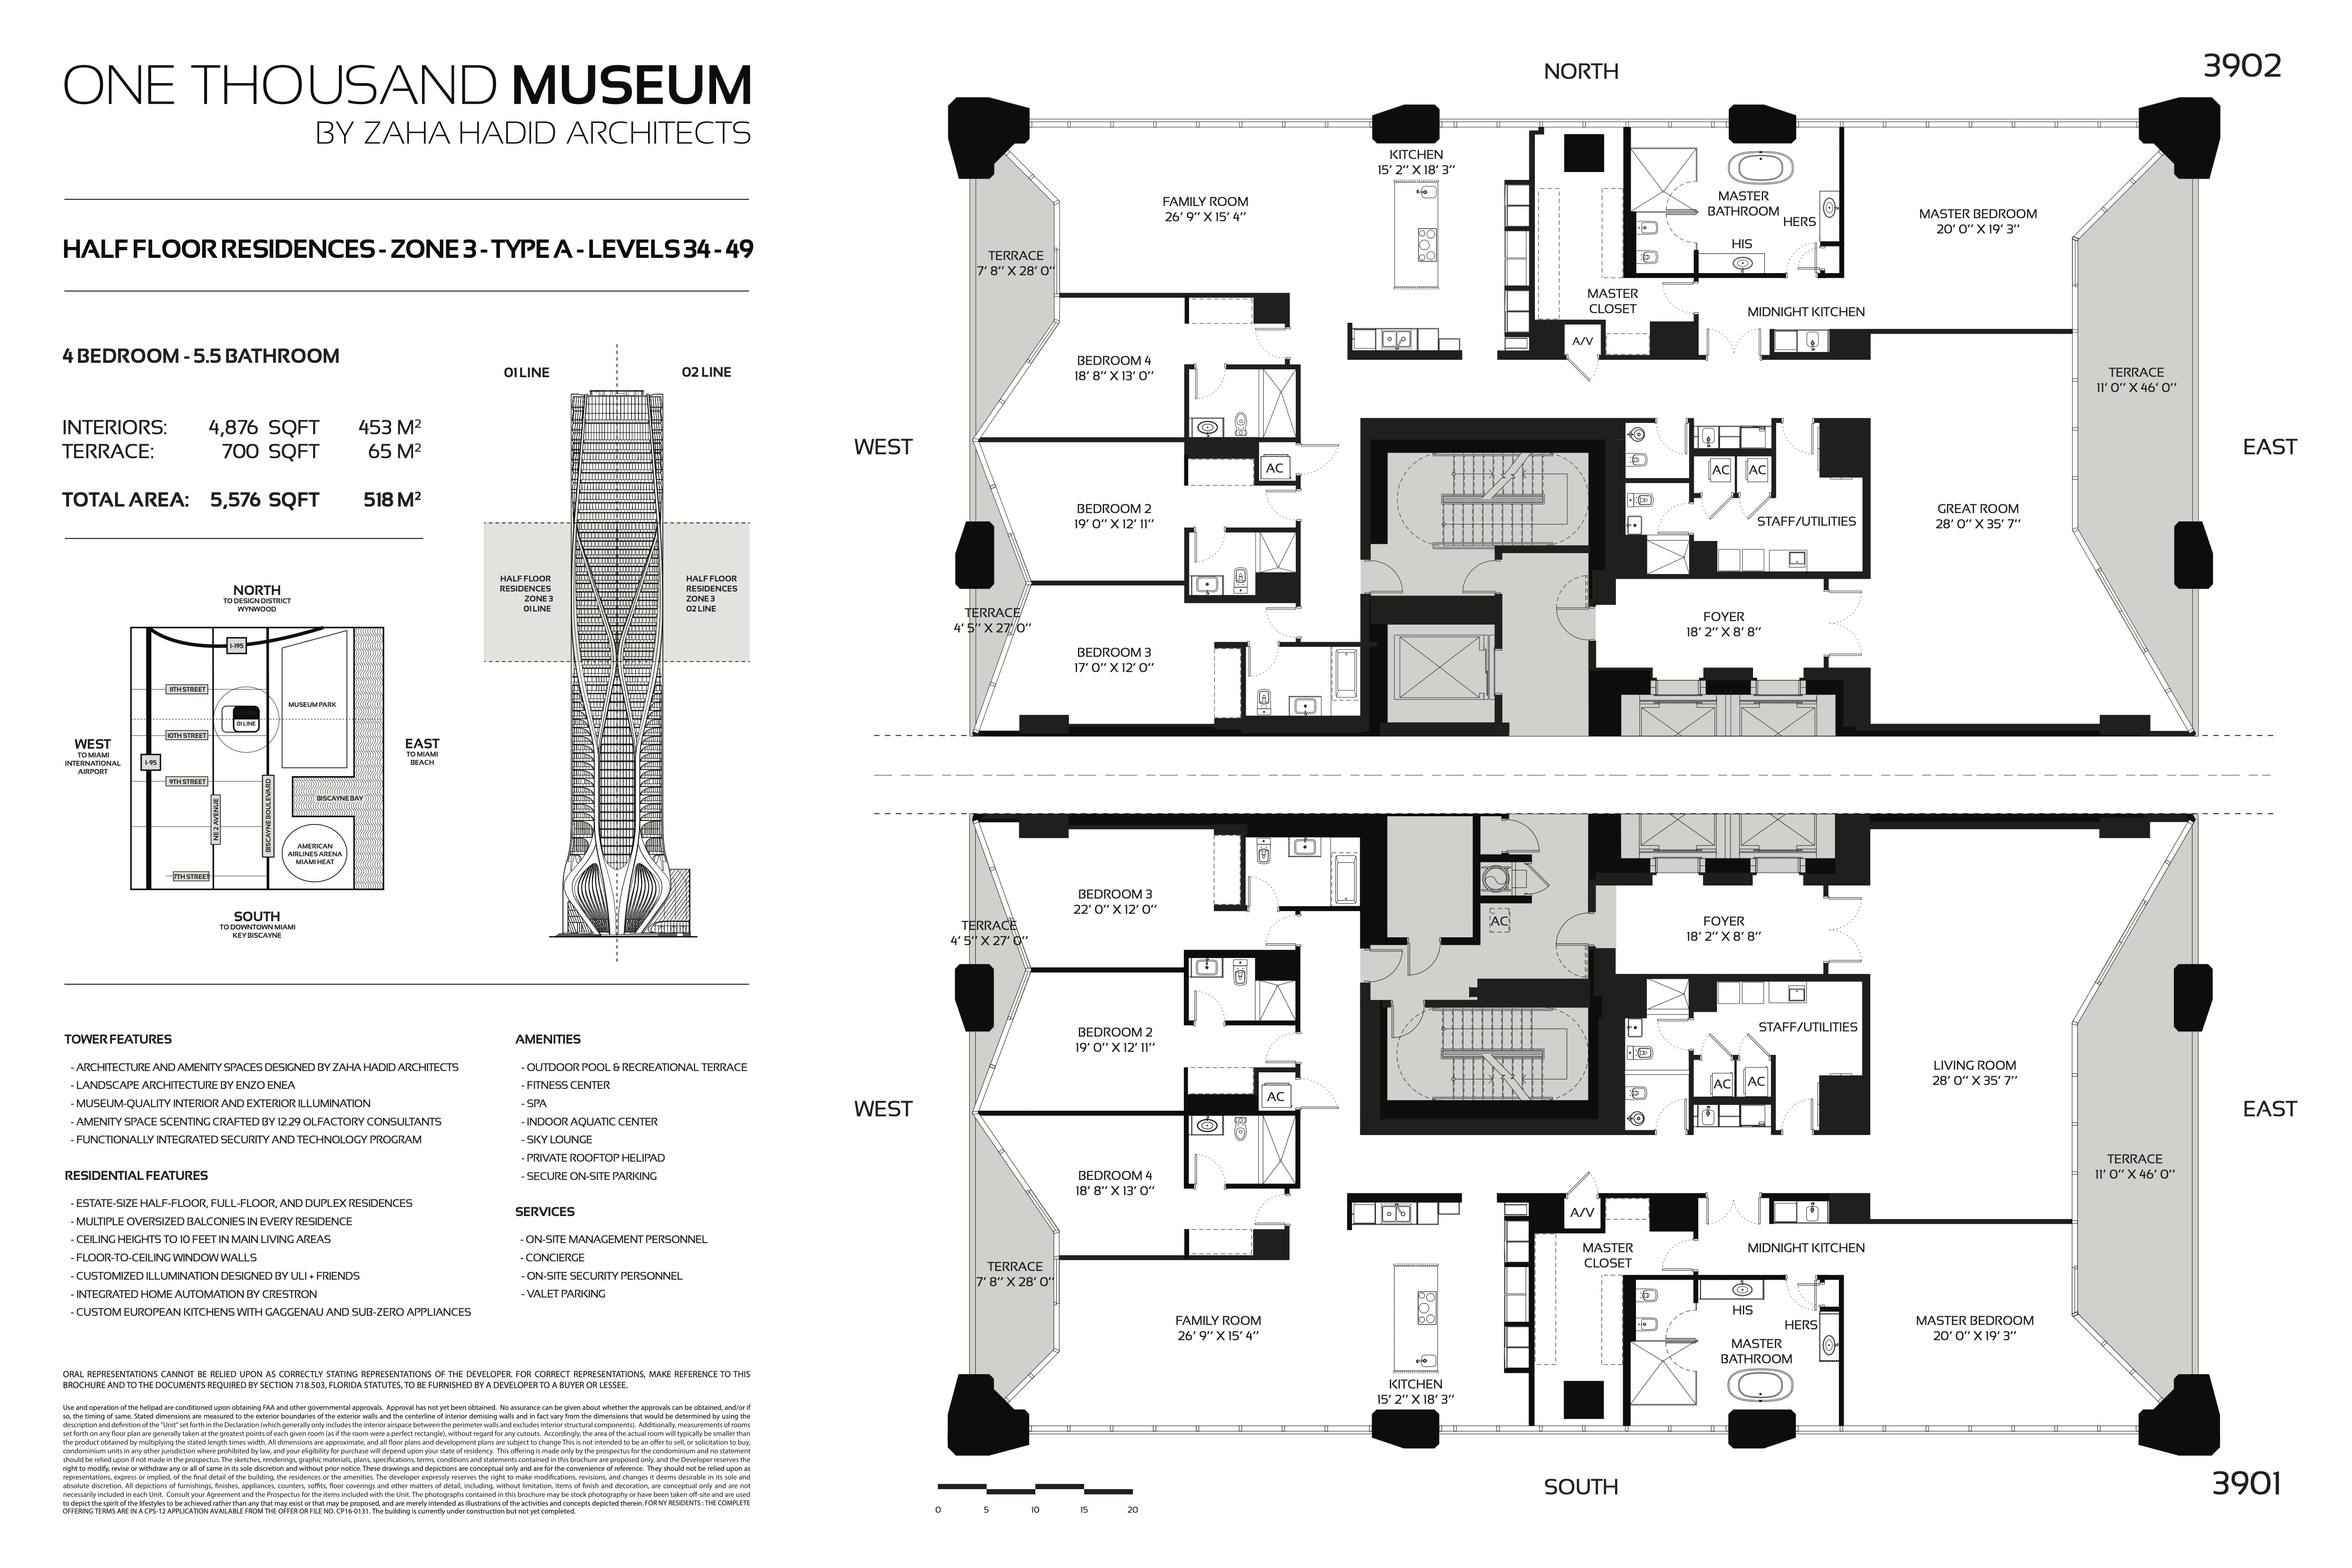 Floor Plan for 1000 Museum Miami Floorplans, Half Floor Residence Zone 3 Type A Levels 34-49